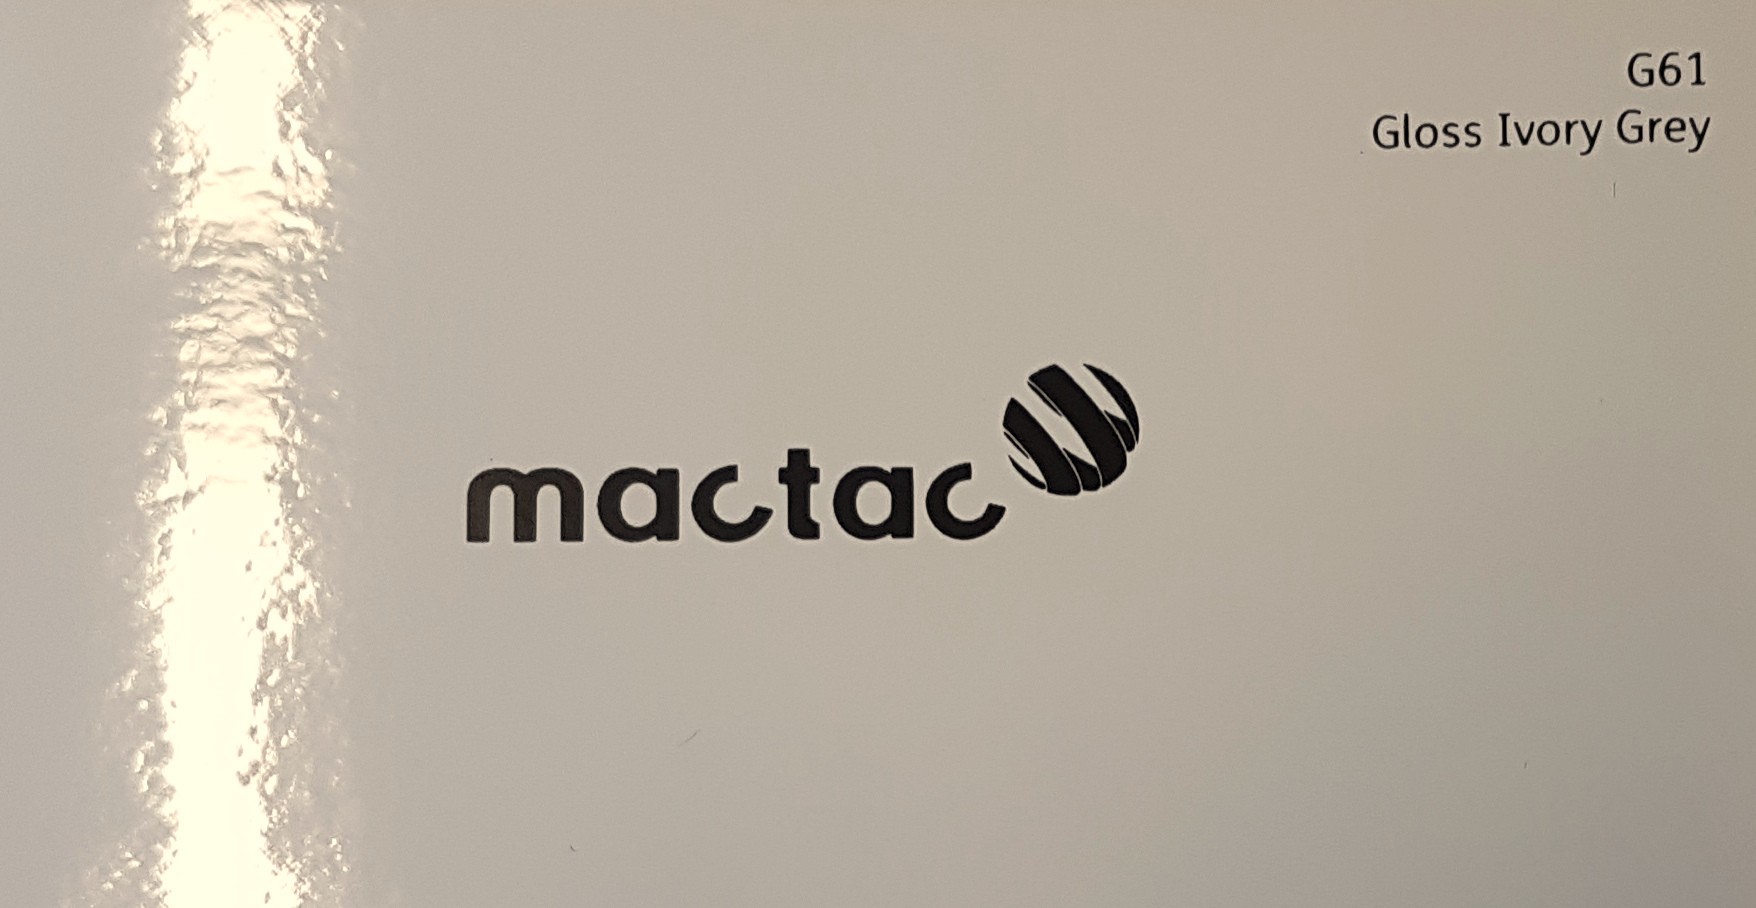 Mactac G61 Gloss Ivory Grey